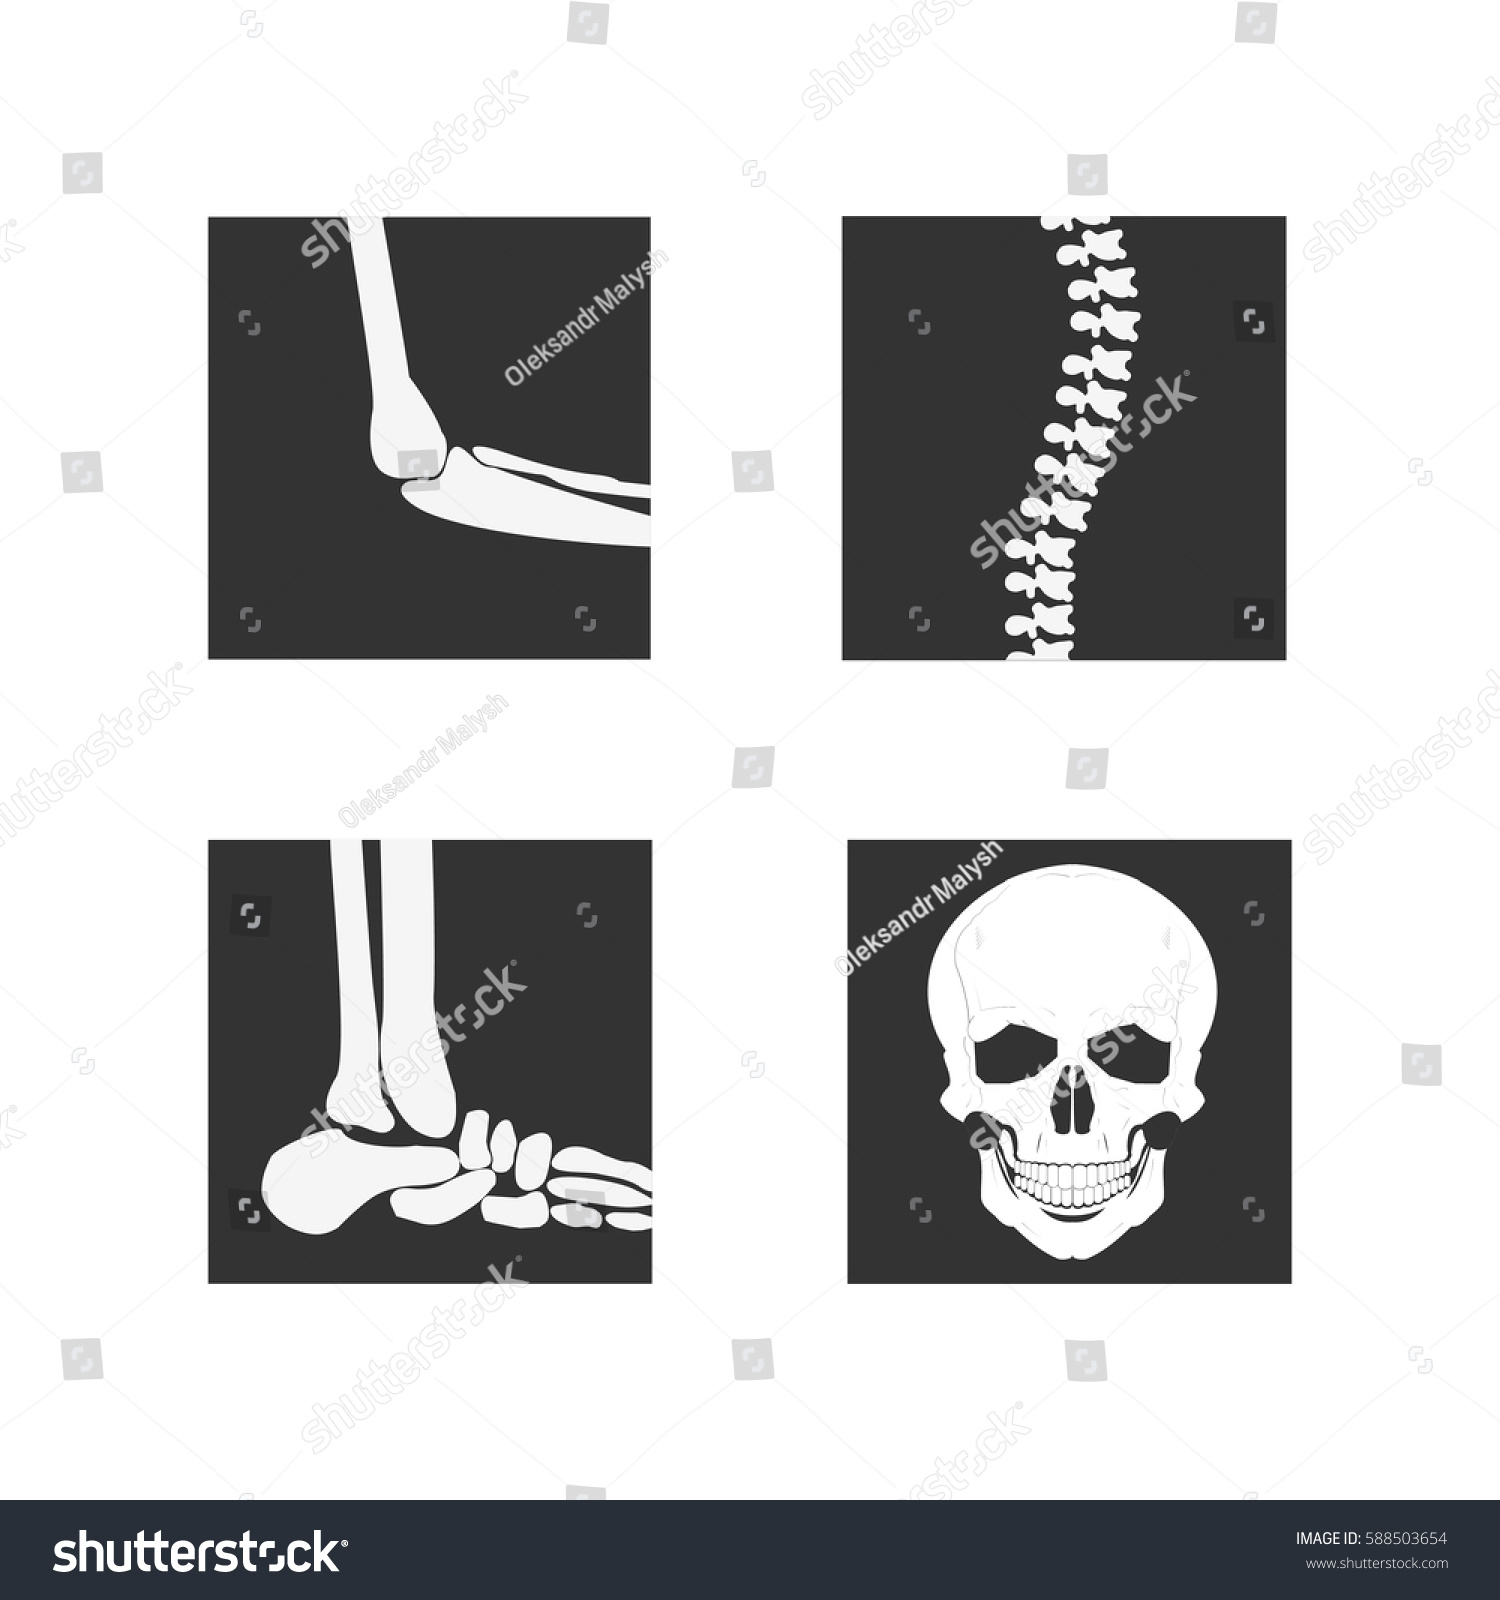 Medical Orthopedic Set Anatomy Human Joint Stock Vector (Royalty Free ...